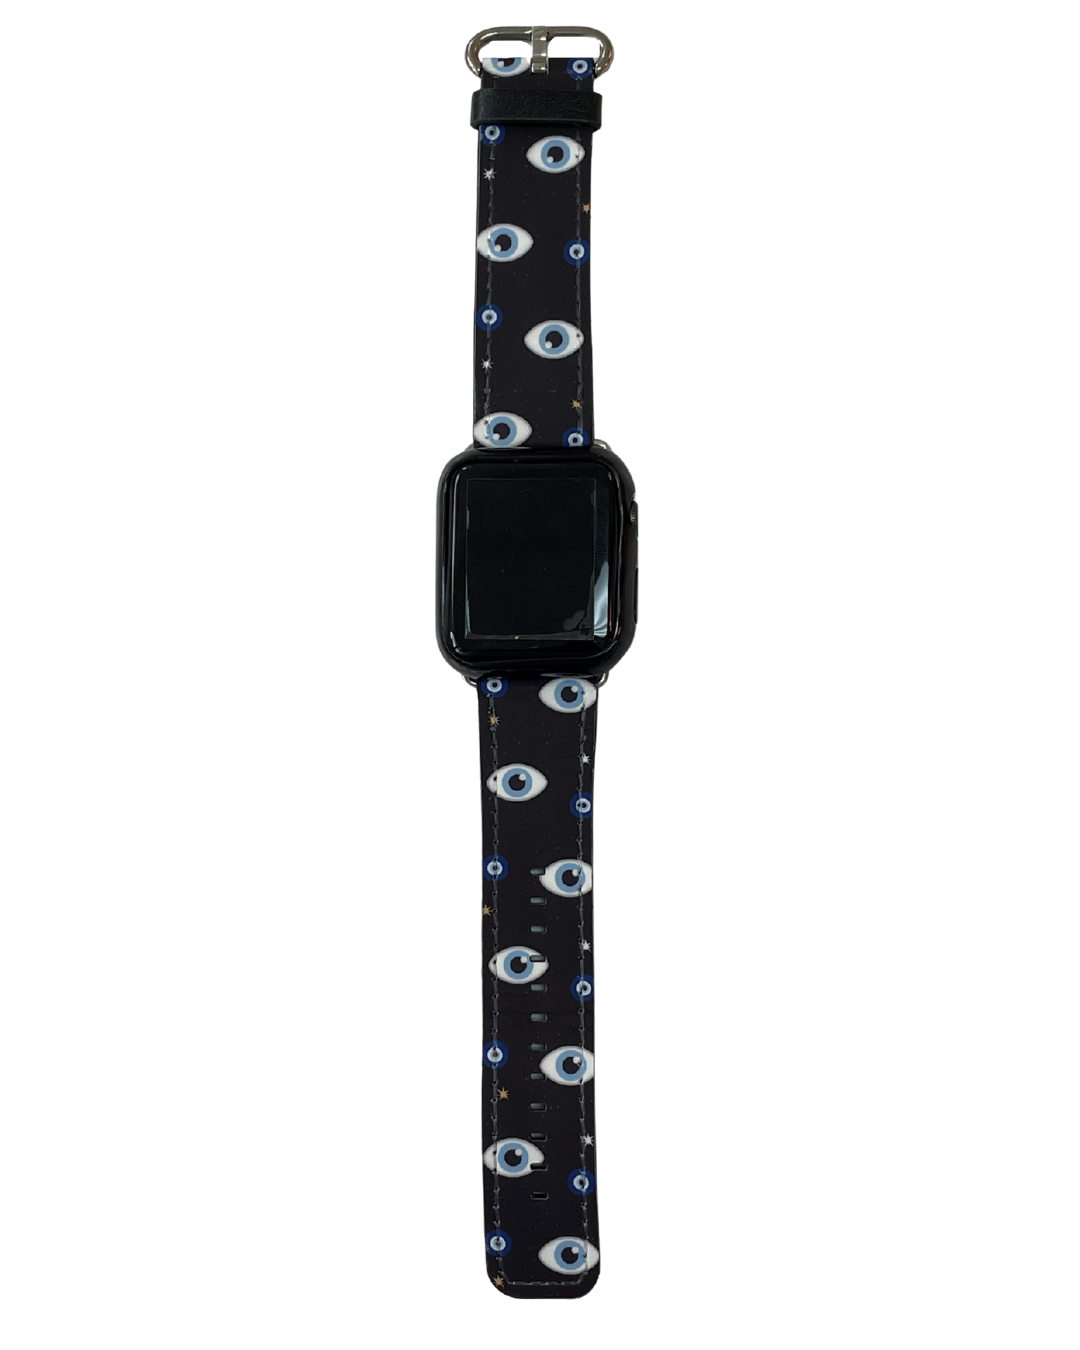 Leather Watch Band for Apple Watch - Woodensun Sunglasses | Eco-fashion eyewear